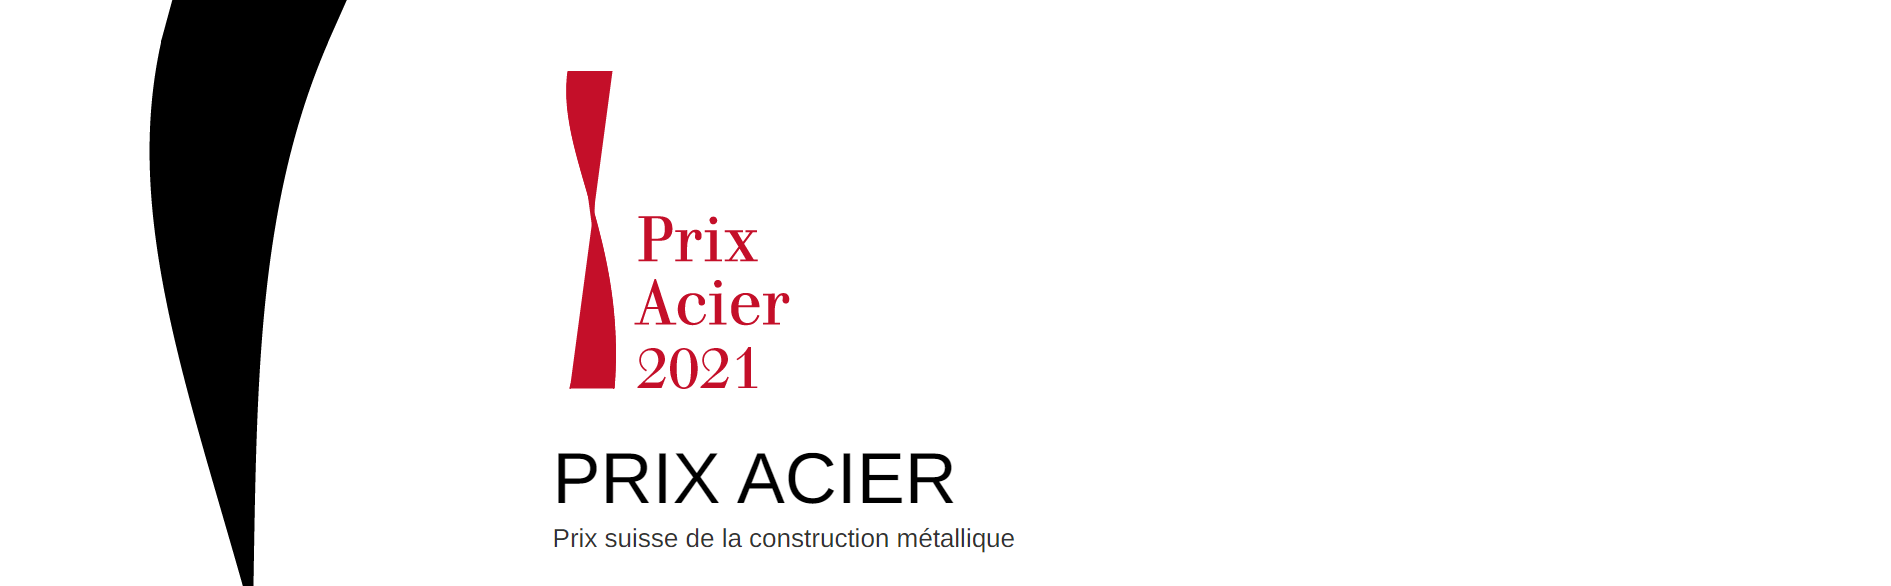 PRIX ACIER 2021